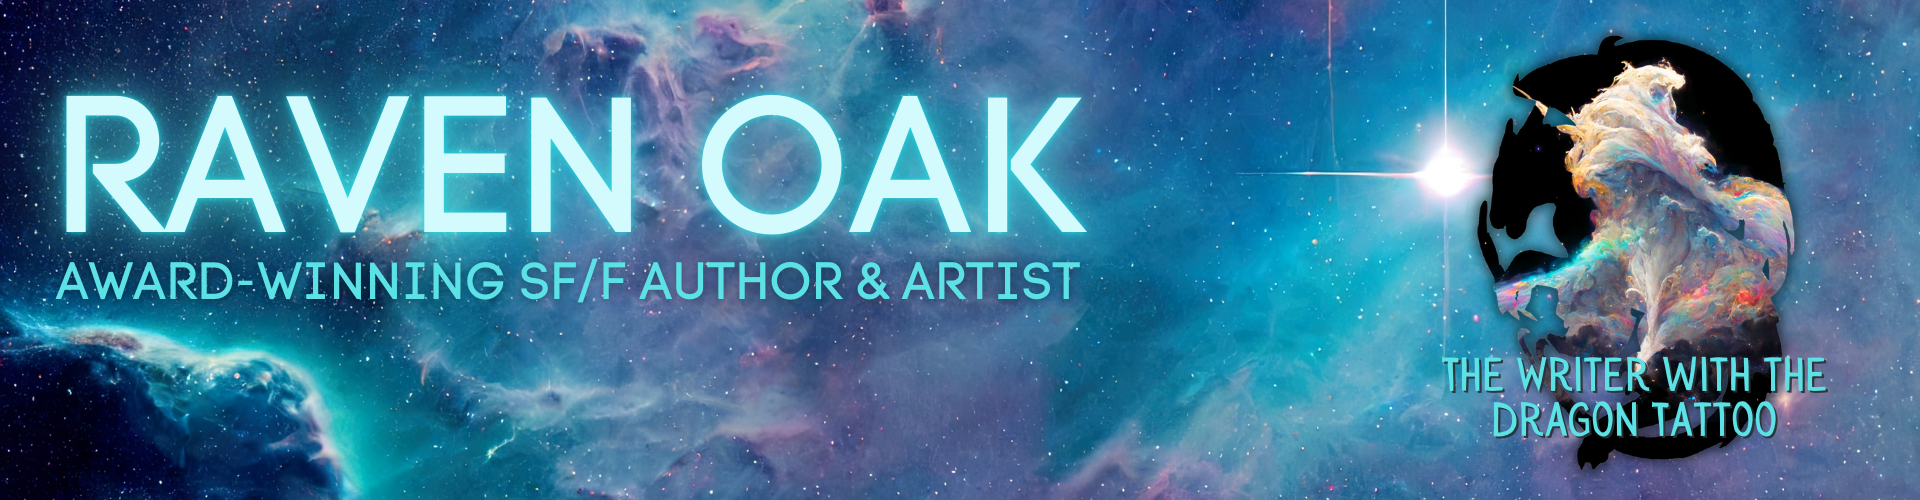 Raven Oak: Award Winning SF/F Author & Artist. The writer with the dragon tattoo.